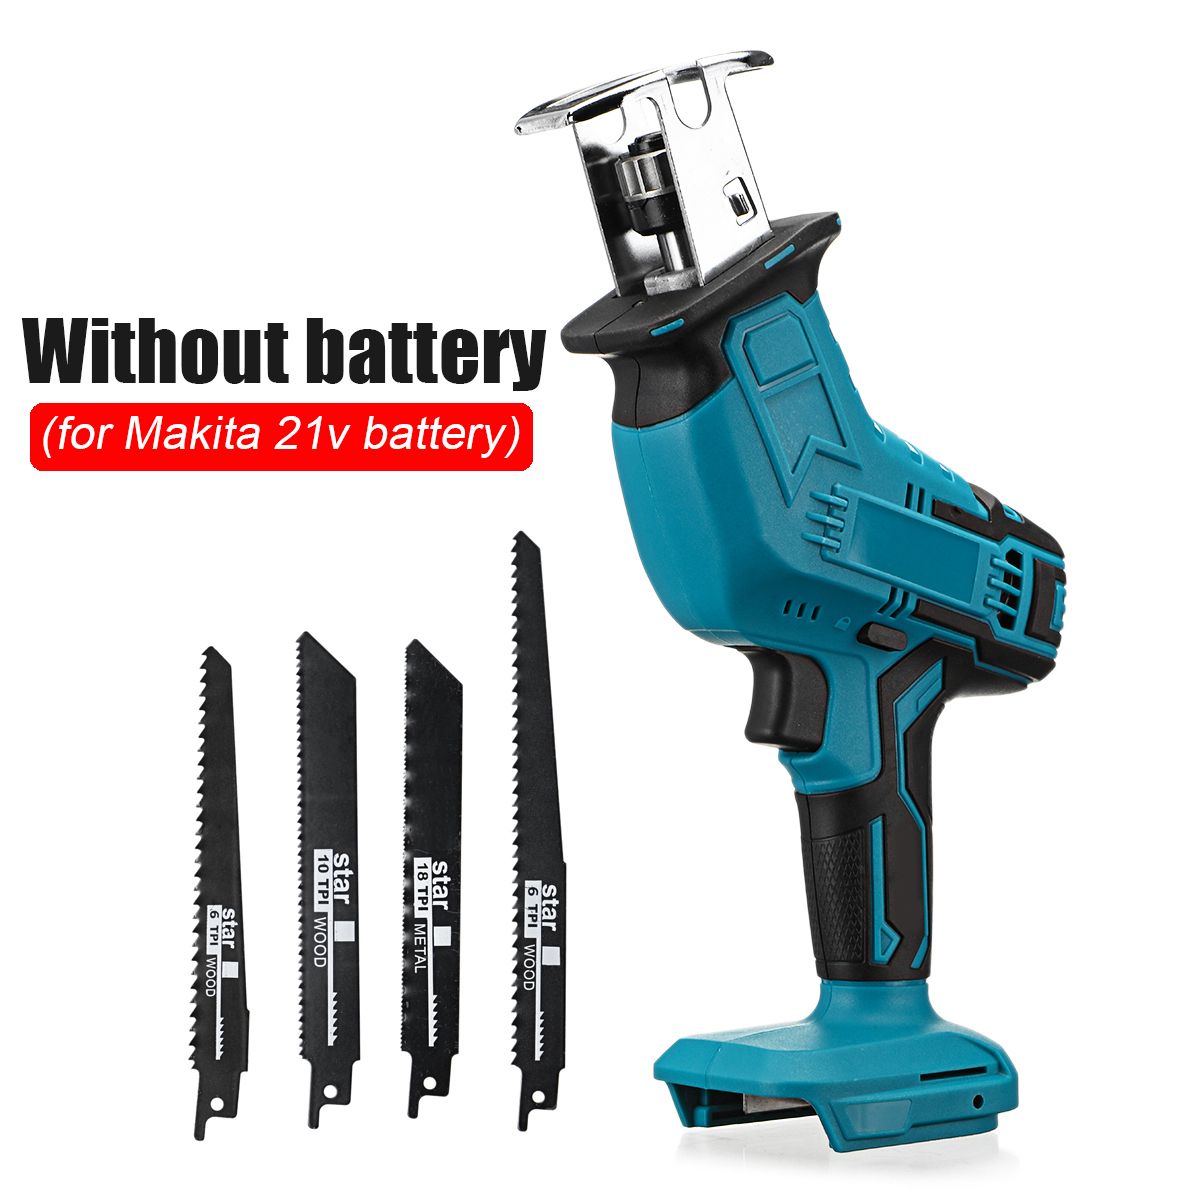 Cordless-Reciprocating-Saw-Electric-Sabre-Saw-Woodworking-Wood-Metal-Cutting-Tool-For-Makita-21V-Bat-1757430